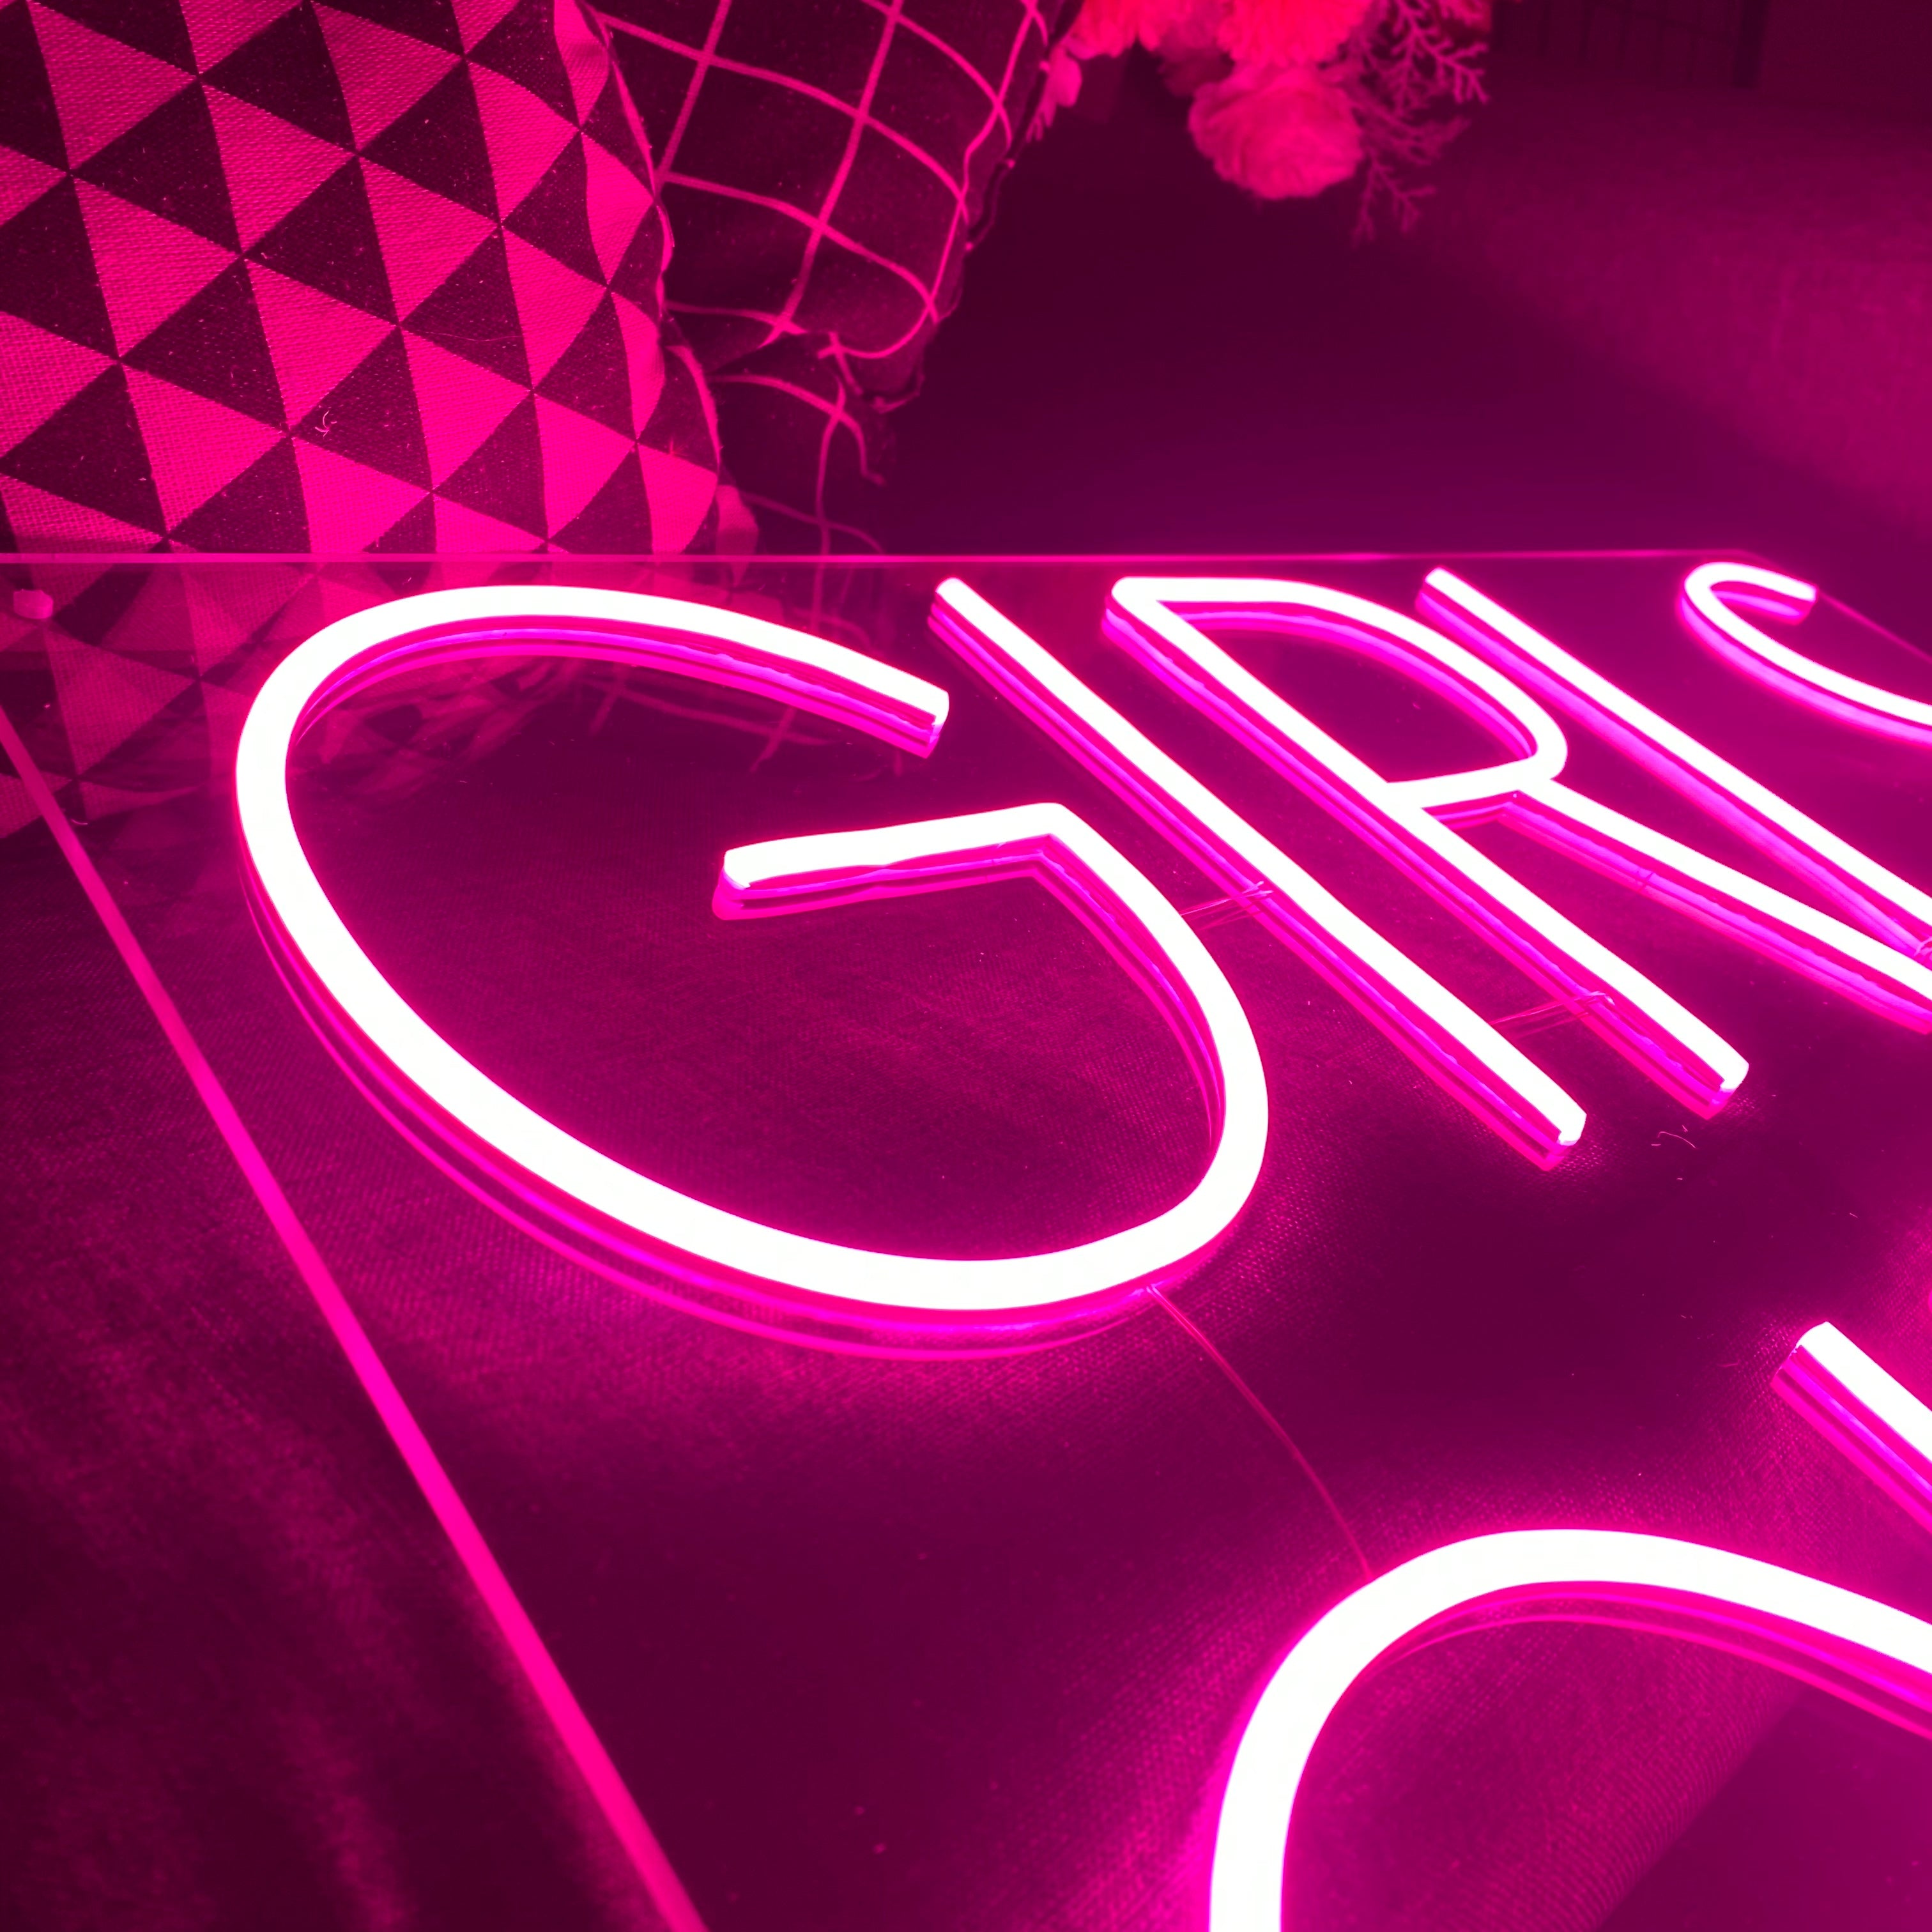 Girls Girls Girls Pink Neon Sign